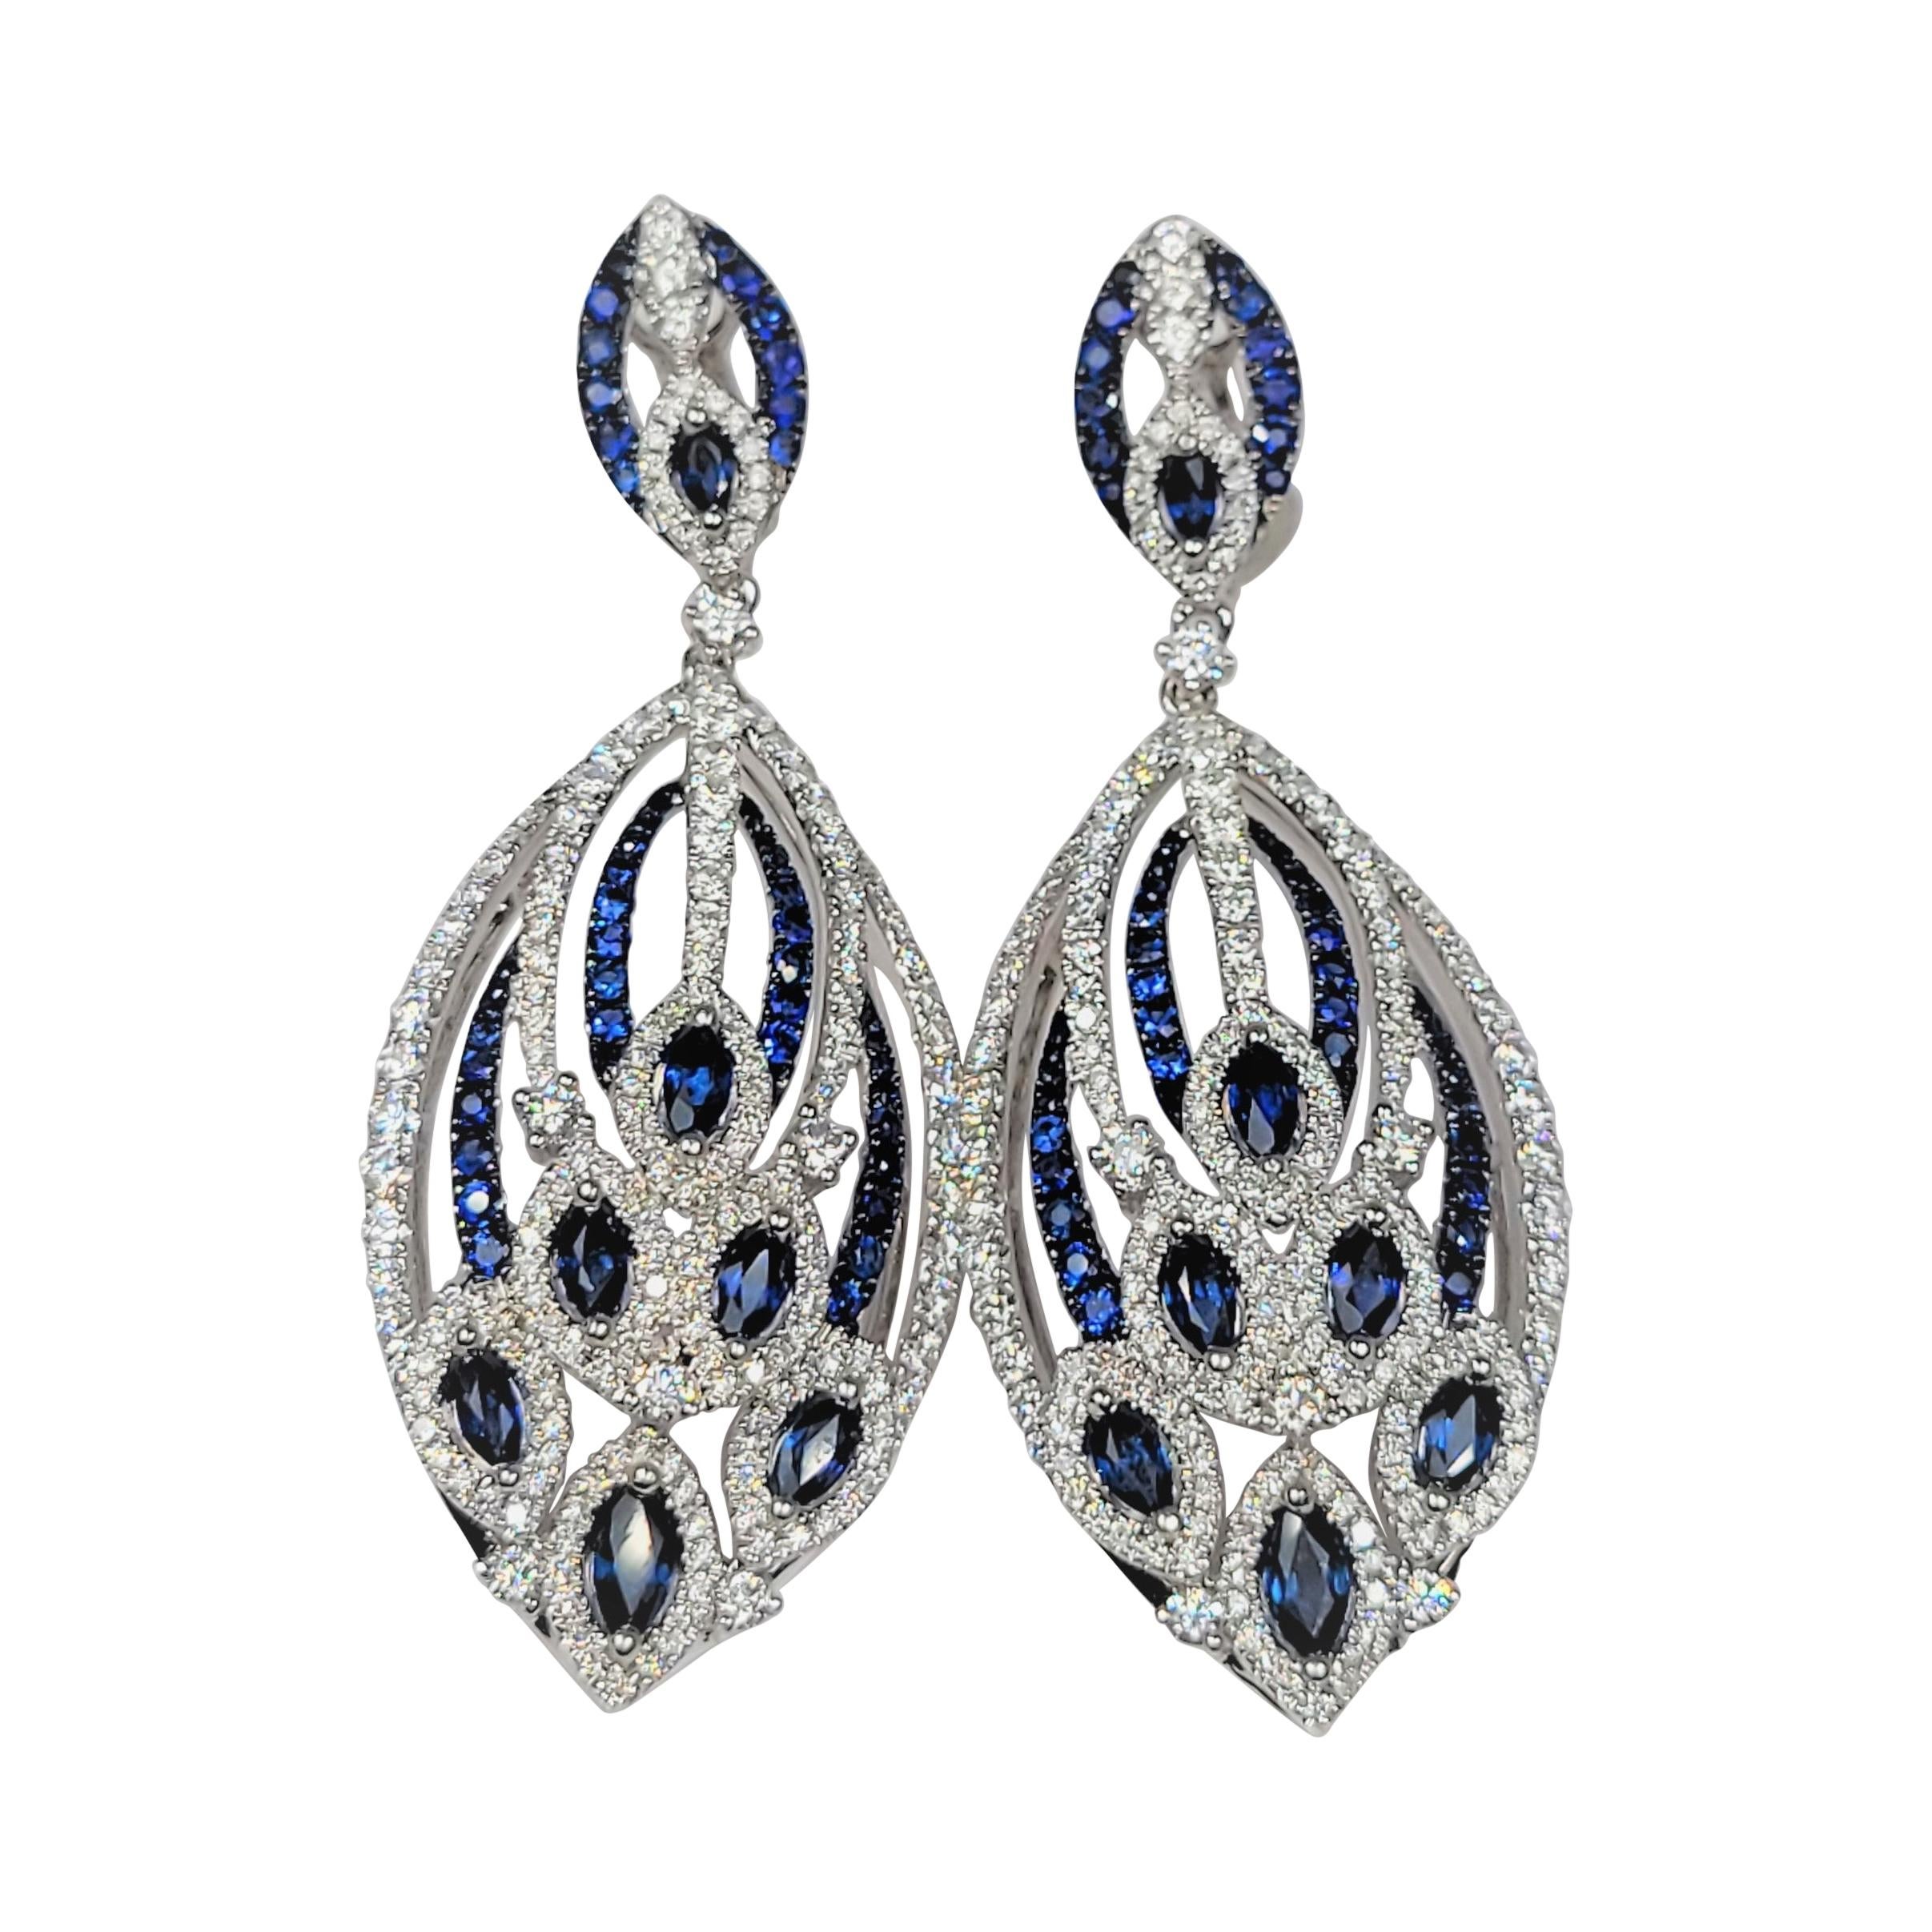 Diamond and Blue Sapphire Earrings in 18 Karat White Gold